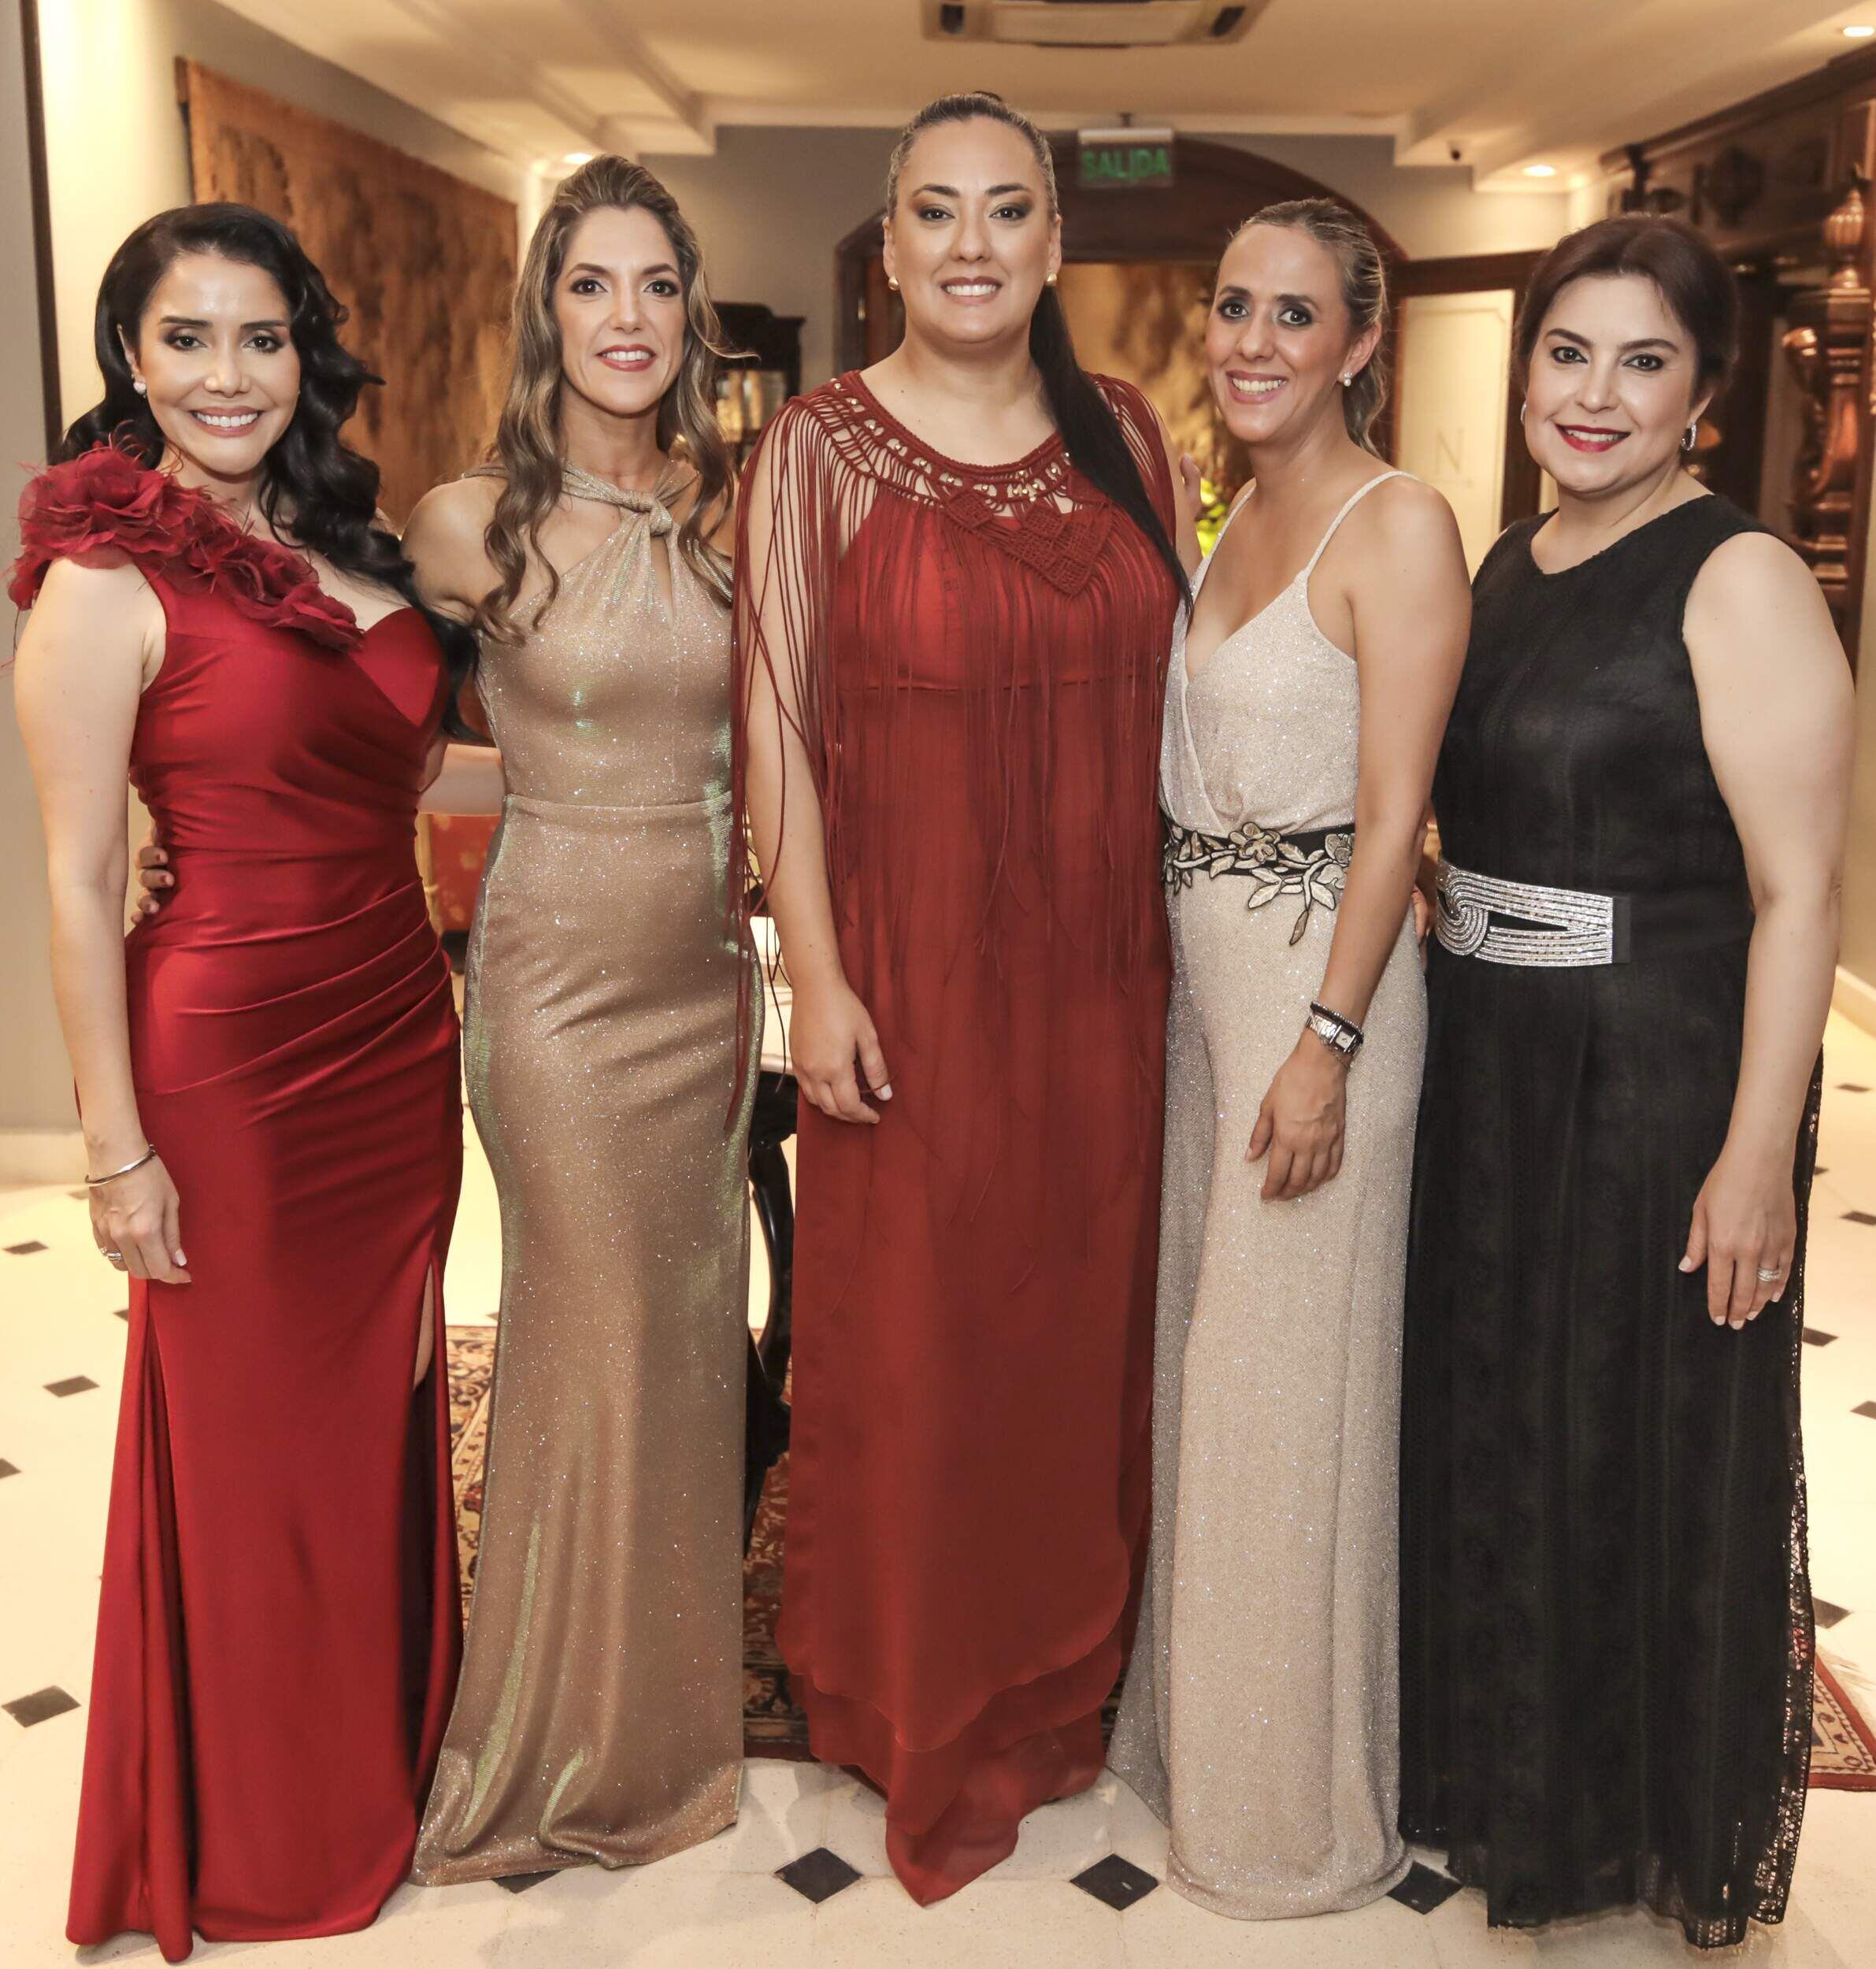 Rosmary Rodríguez, Nathalia Zayas, María Jose Alborno, Cinthia Carrizo y Mariela Figueredo.